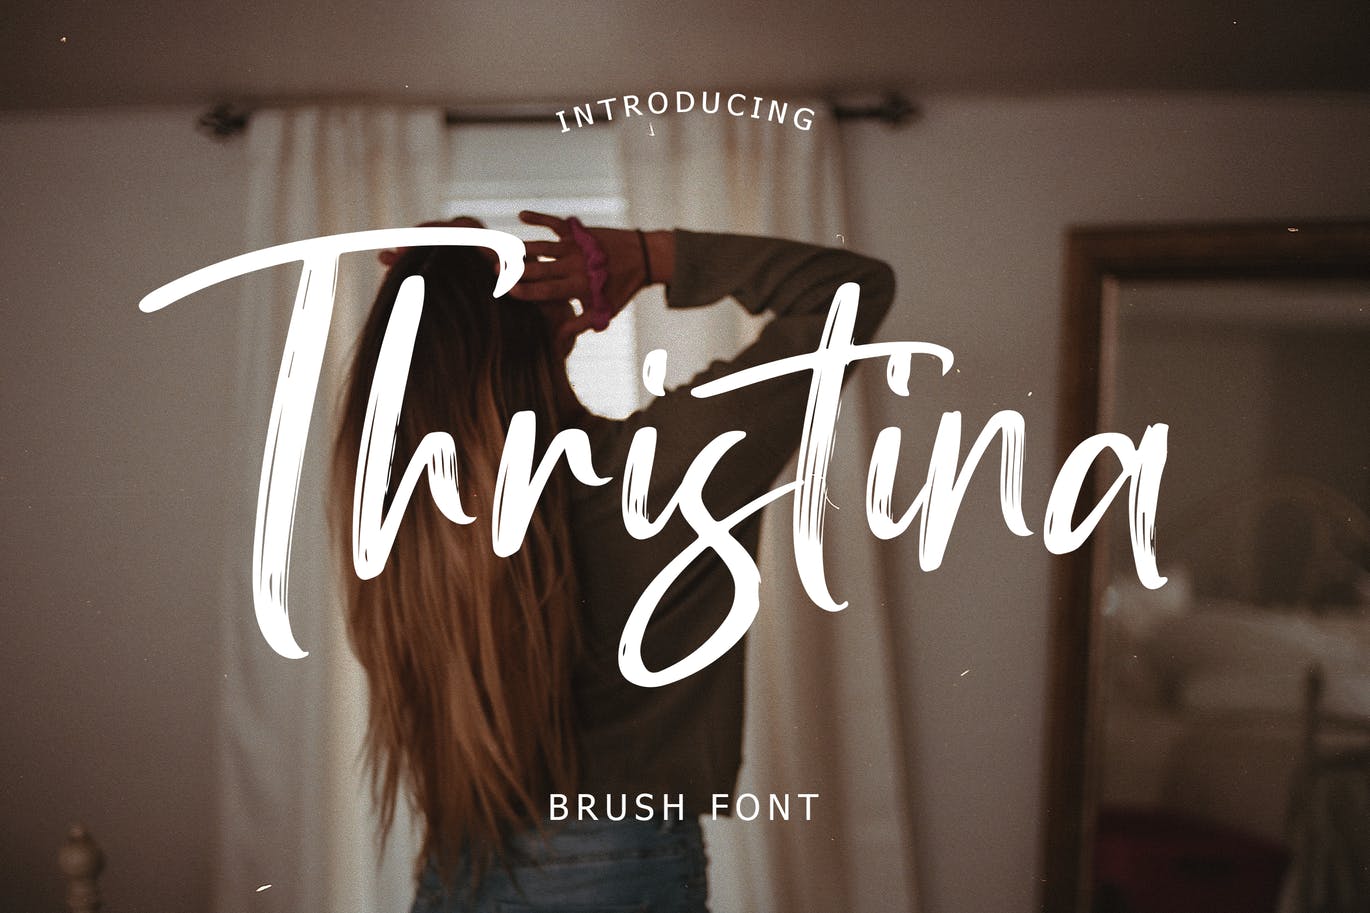 A cute brush font